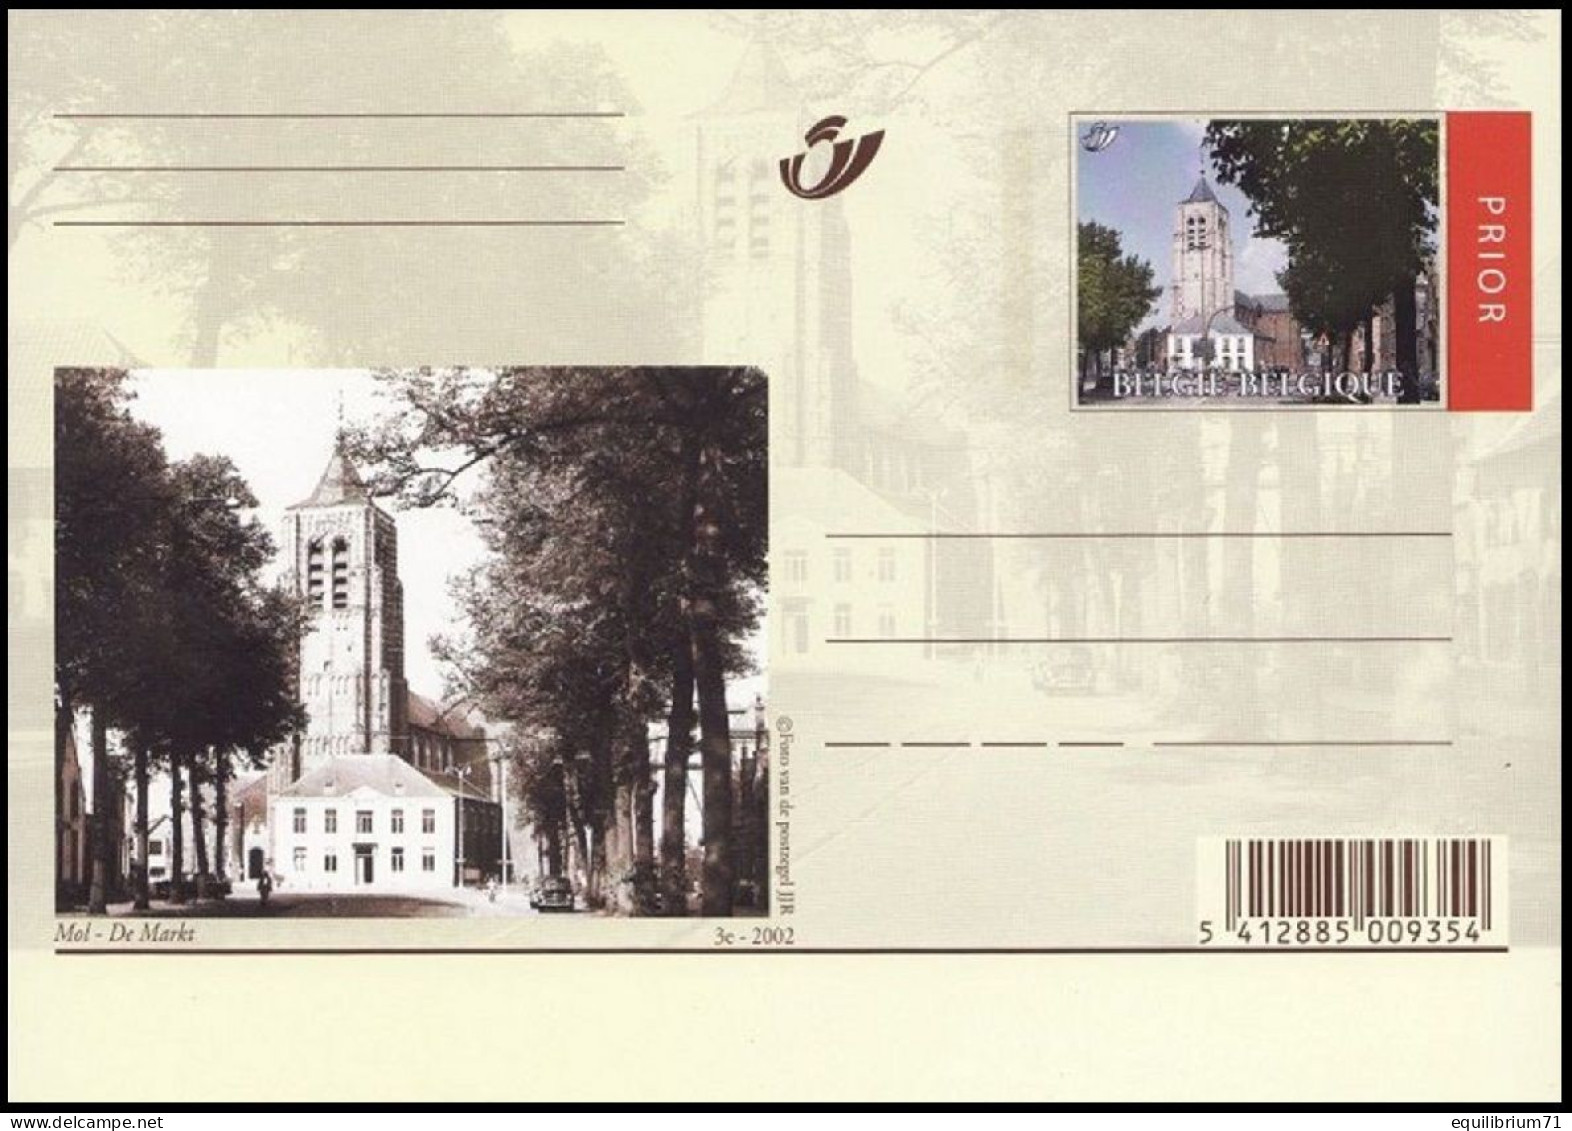 CP/BK83** - Cartes Illustrées/Geïllustreerde Briefkaarten/Illustrierte Postkarten - Autrefois & Maintenant/Vroeger En Nu - Illustrated Postcards (1971-2014) [BK]